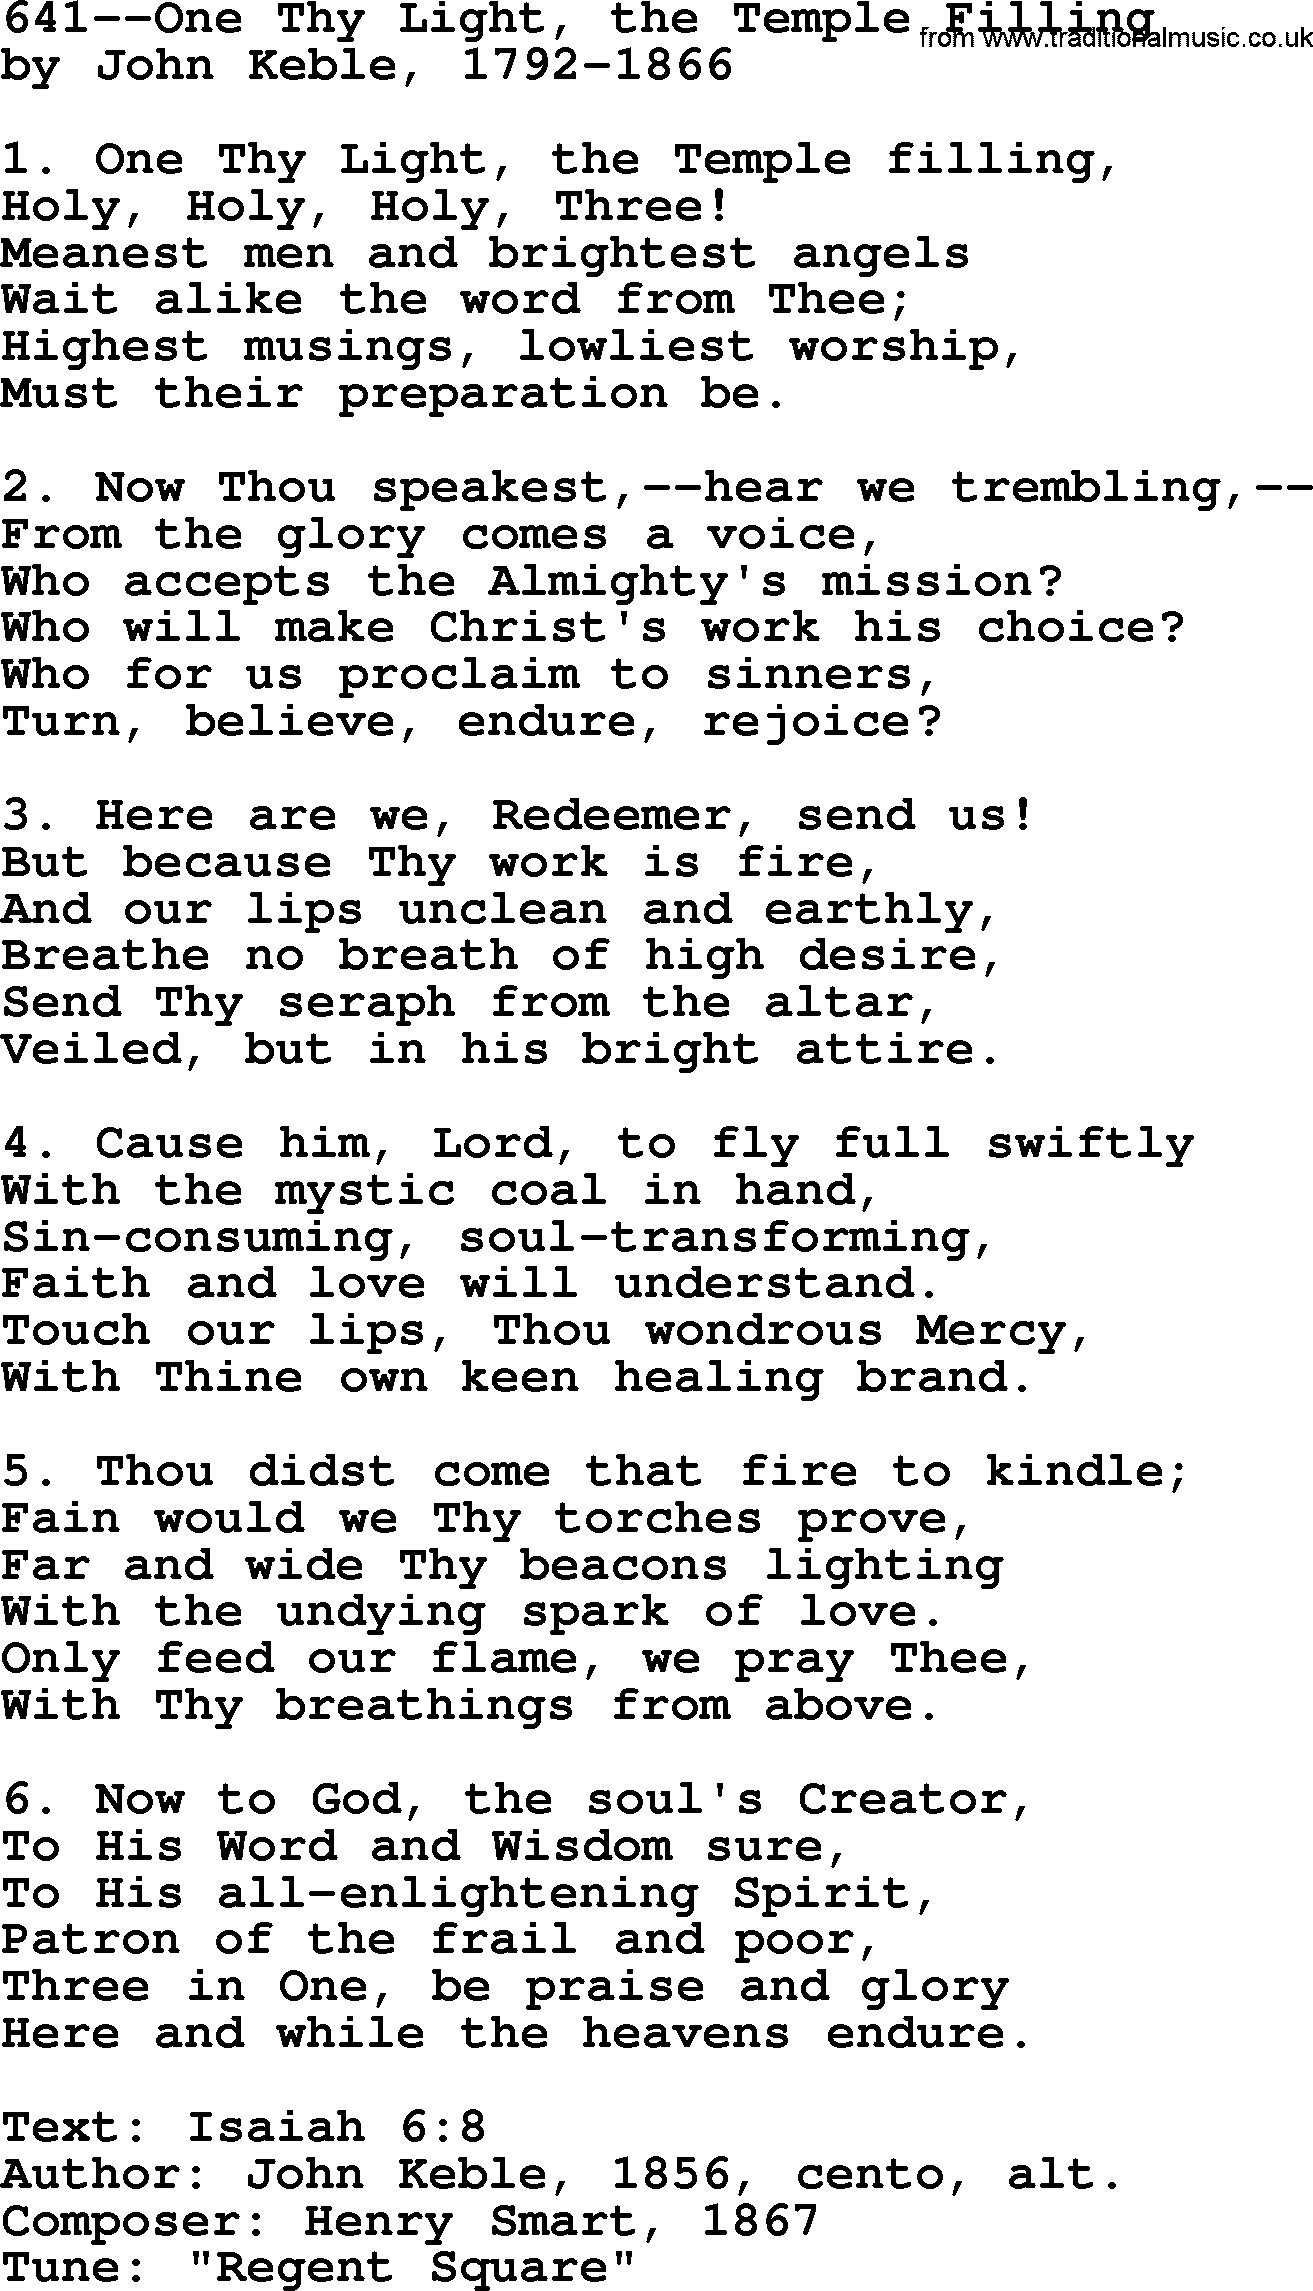 Lutheran Hymn: 641--One Thy Light, the Temple Filling.txt lyrics with PDF